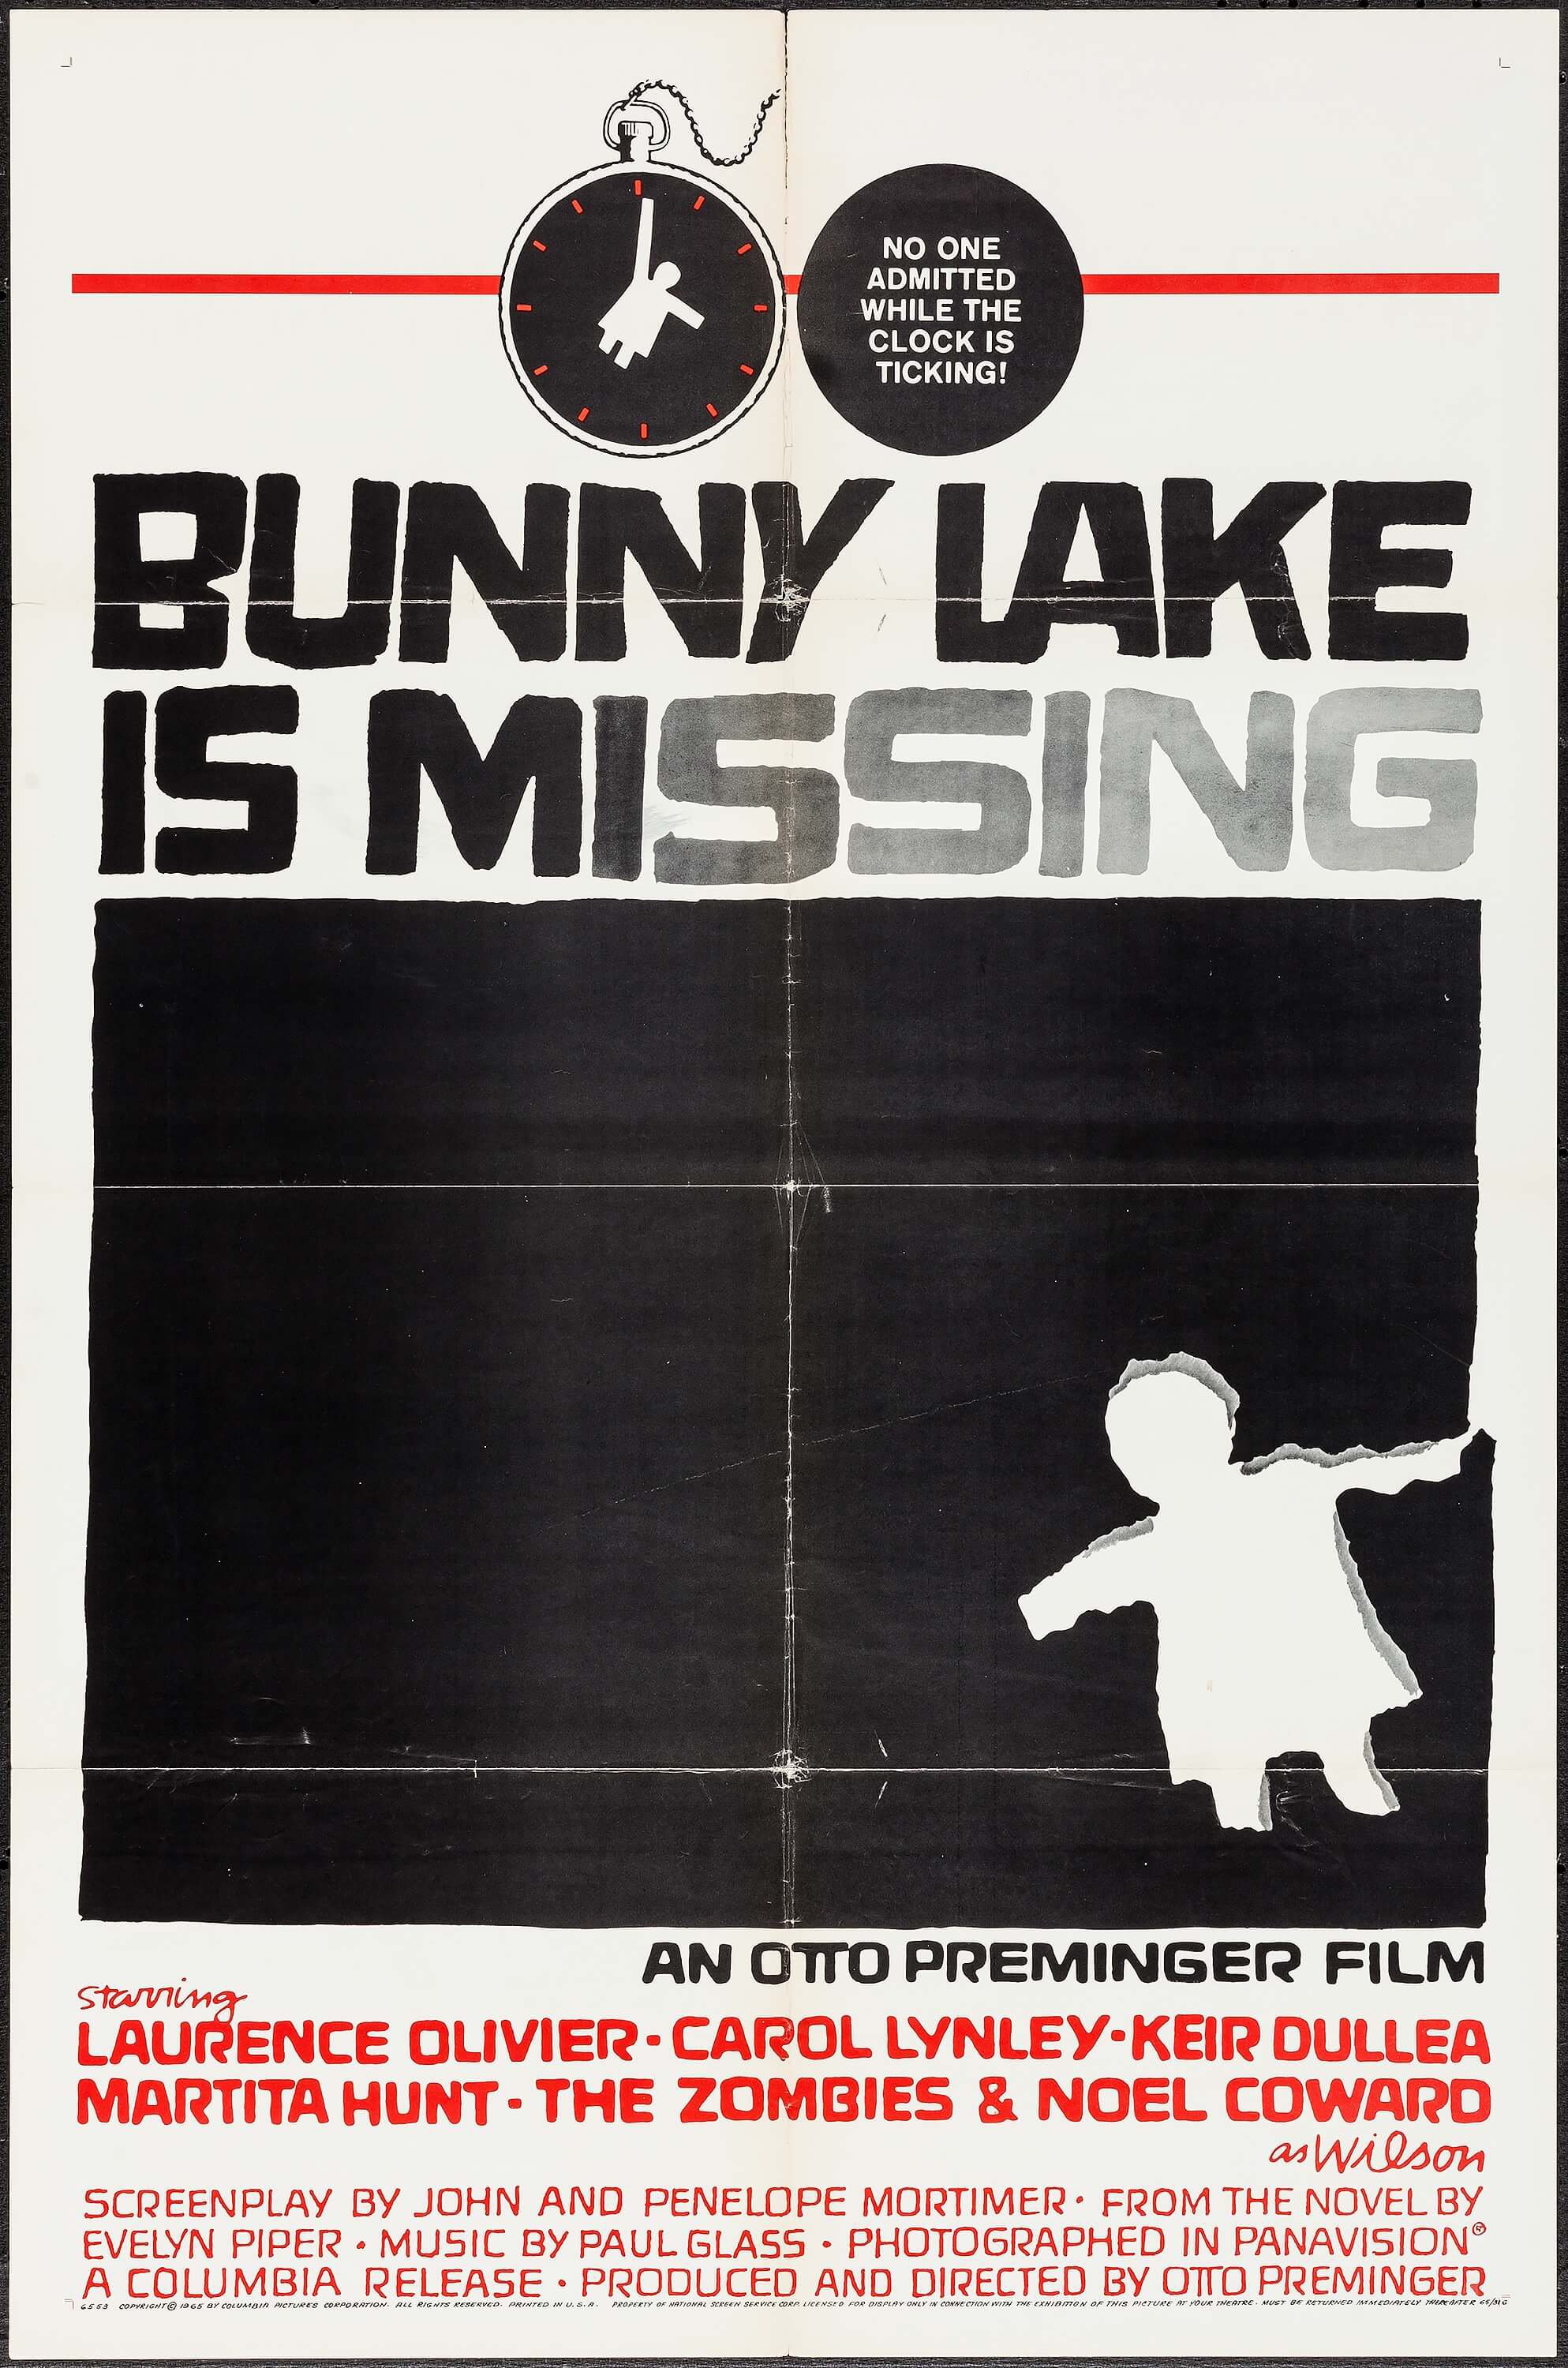 Bunny lake. Исчезнувшая Банни Лейк / Банни Лейк исчезает / Bunny Lake is missing. Сол басс постеры. Исчезновение Банни Лейк книга.